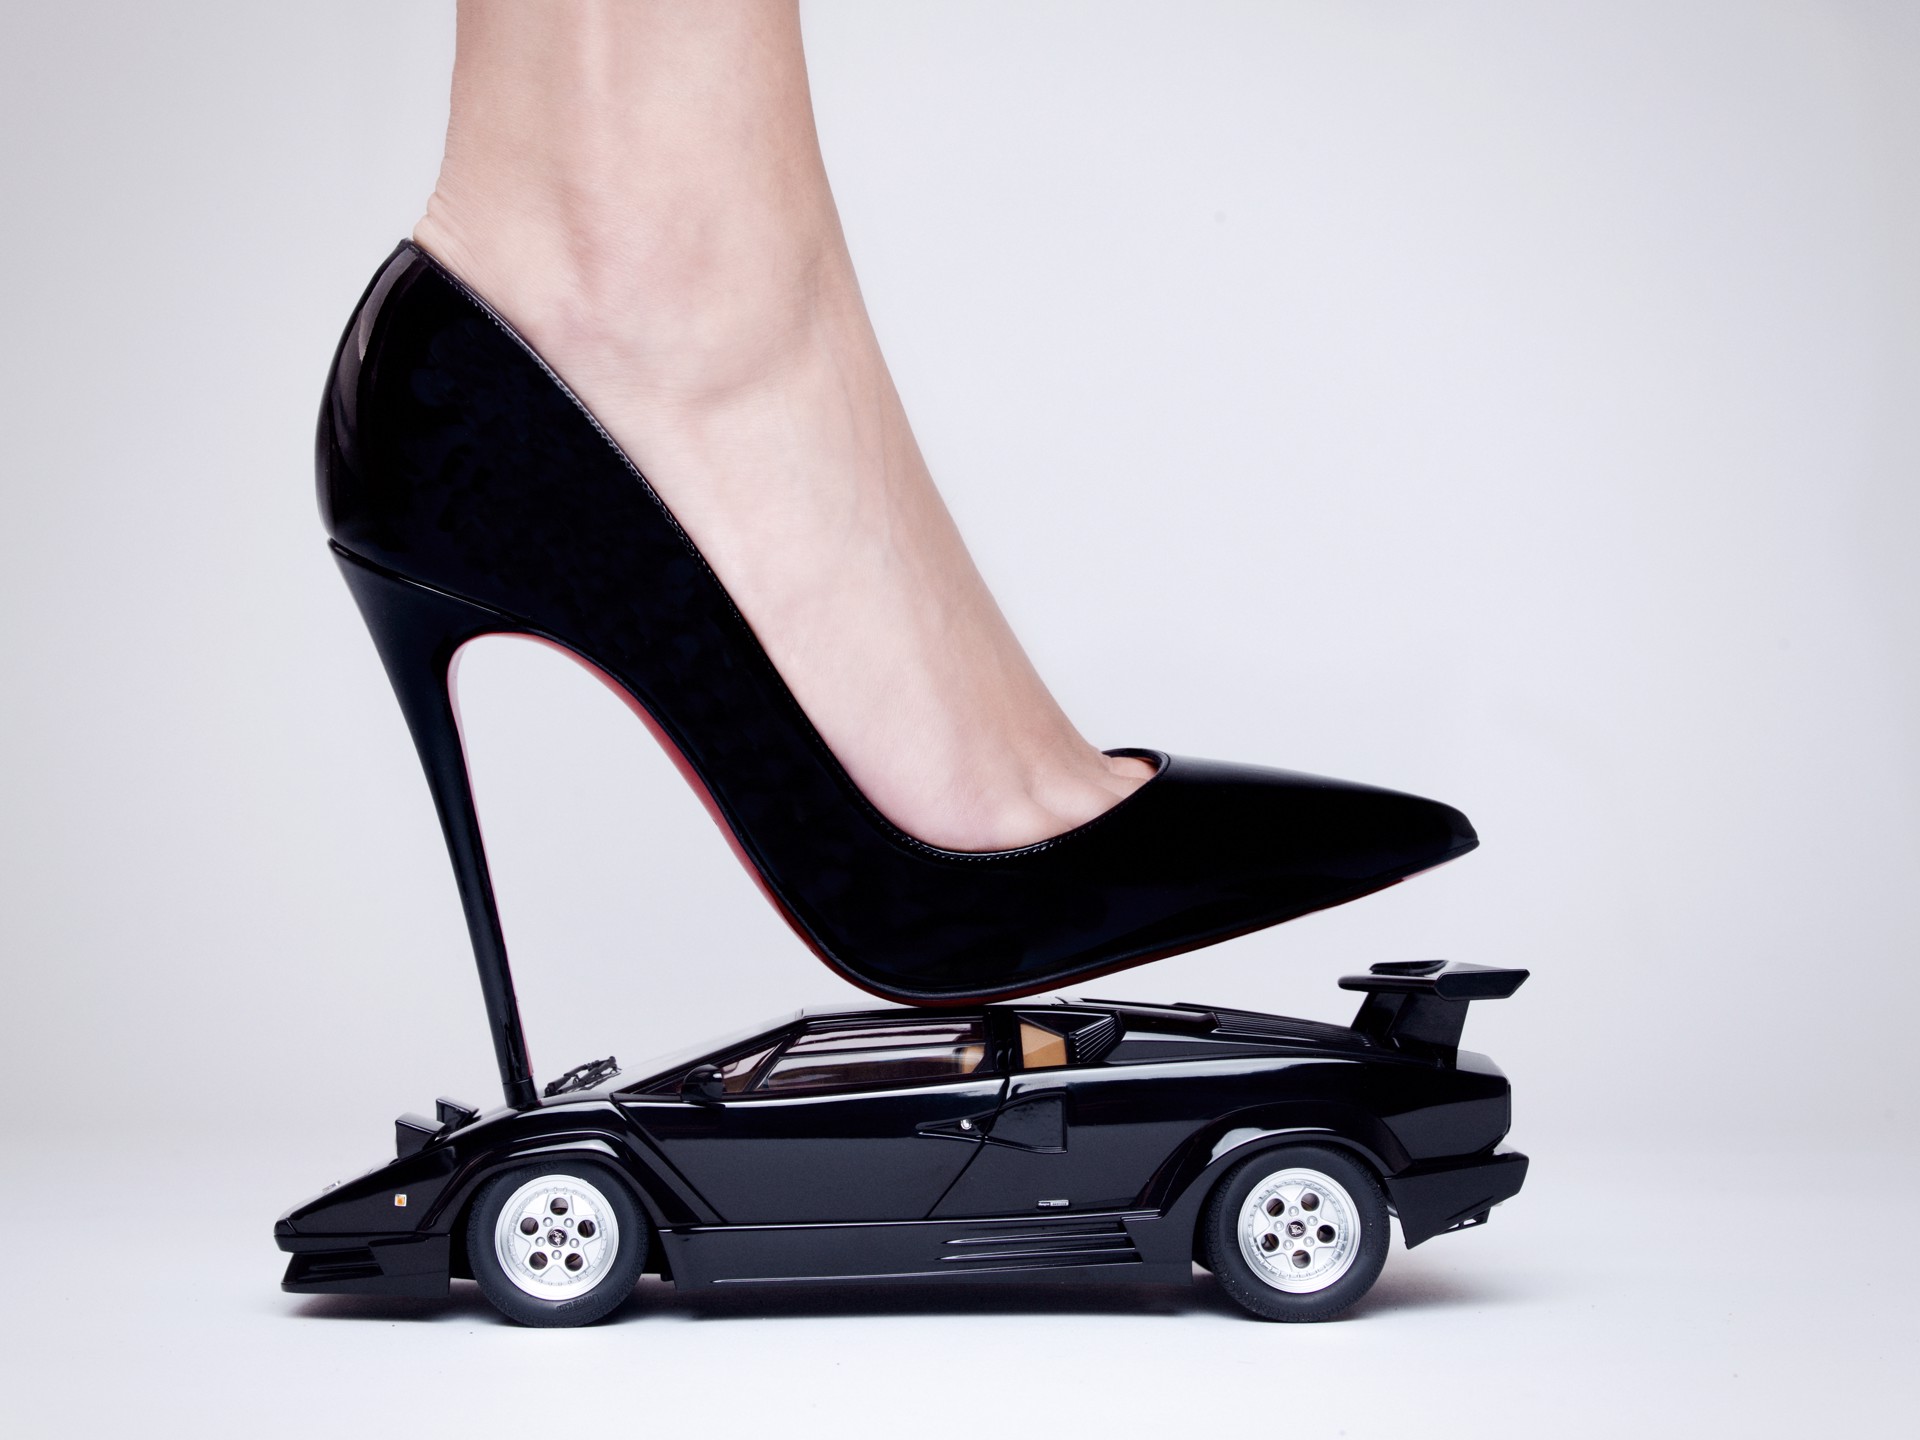 Lamborghini High Heel (AP1) by Tyler Shields